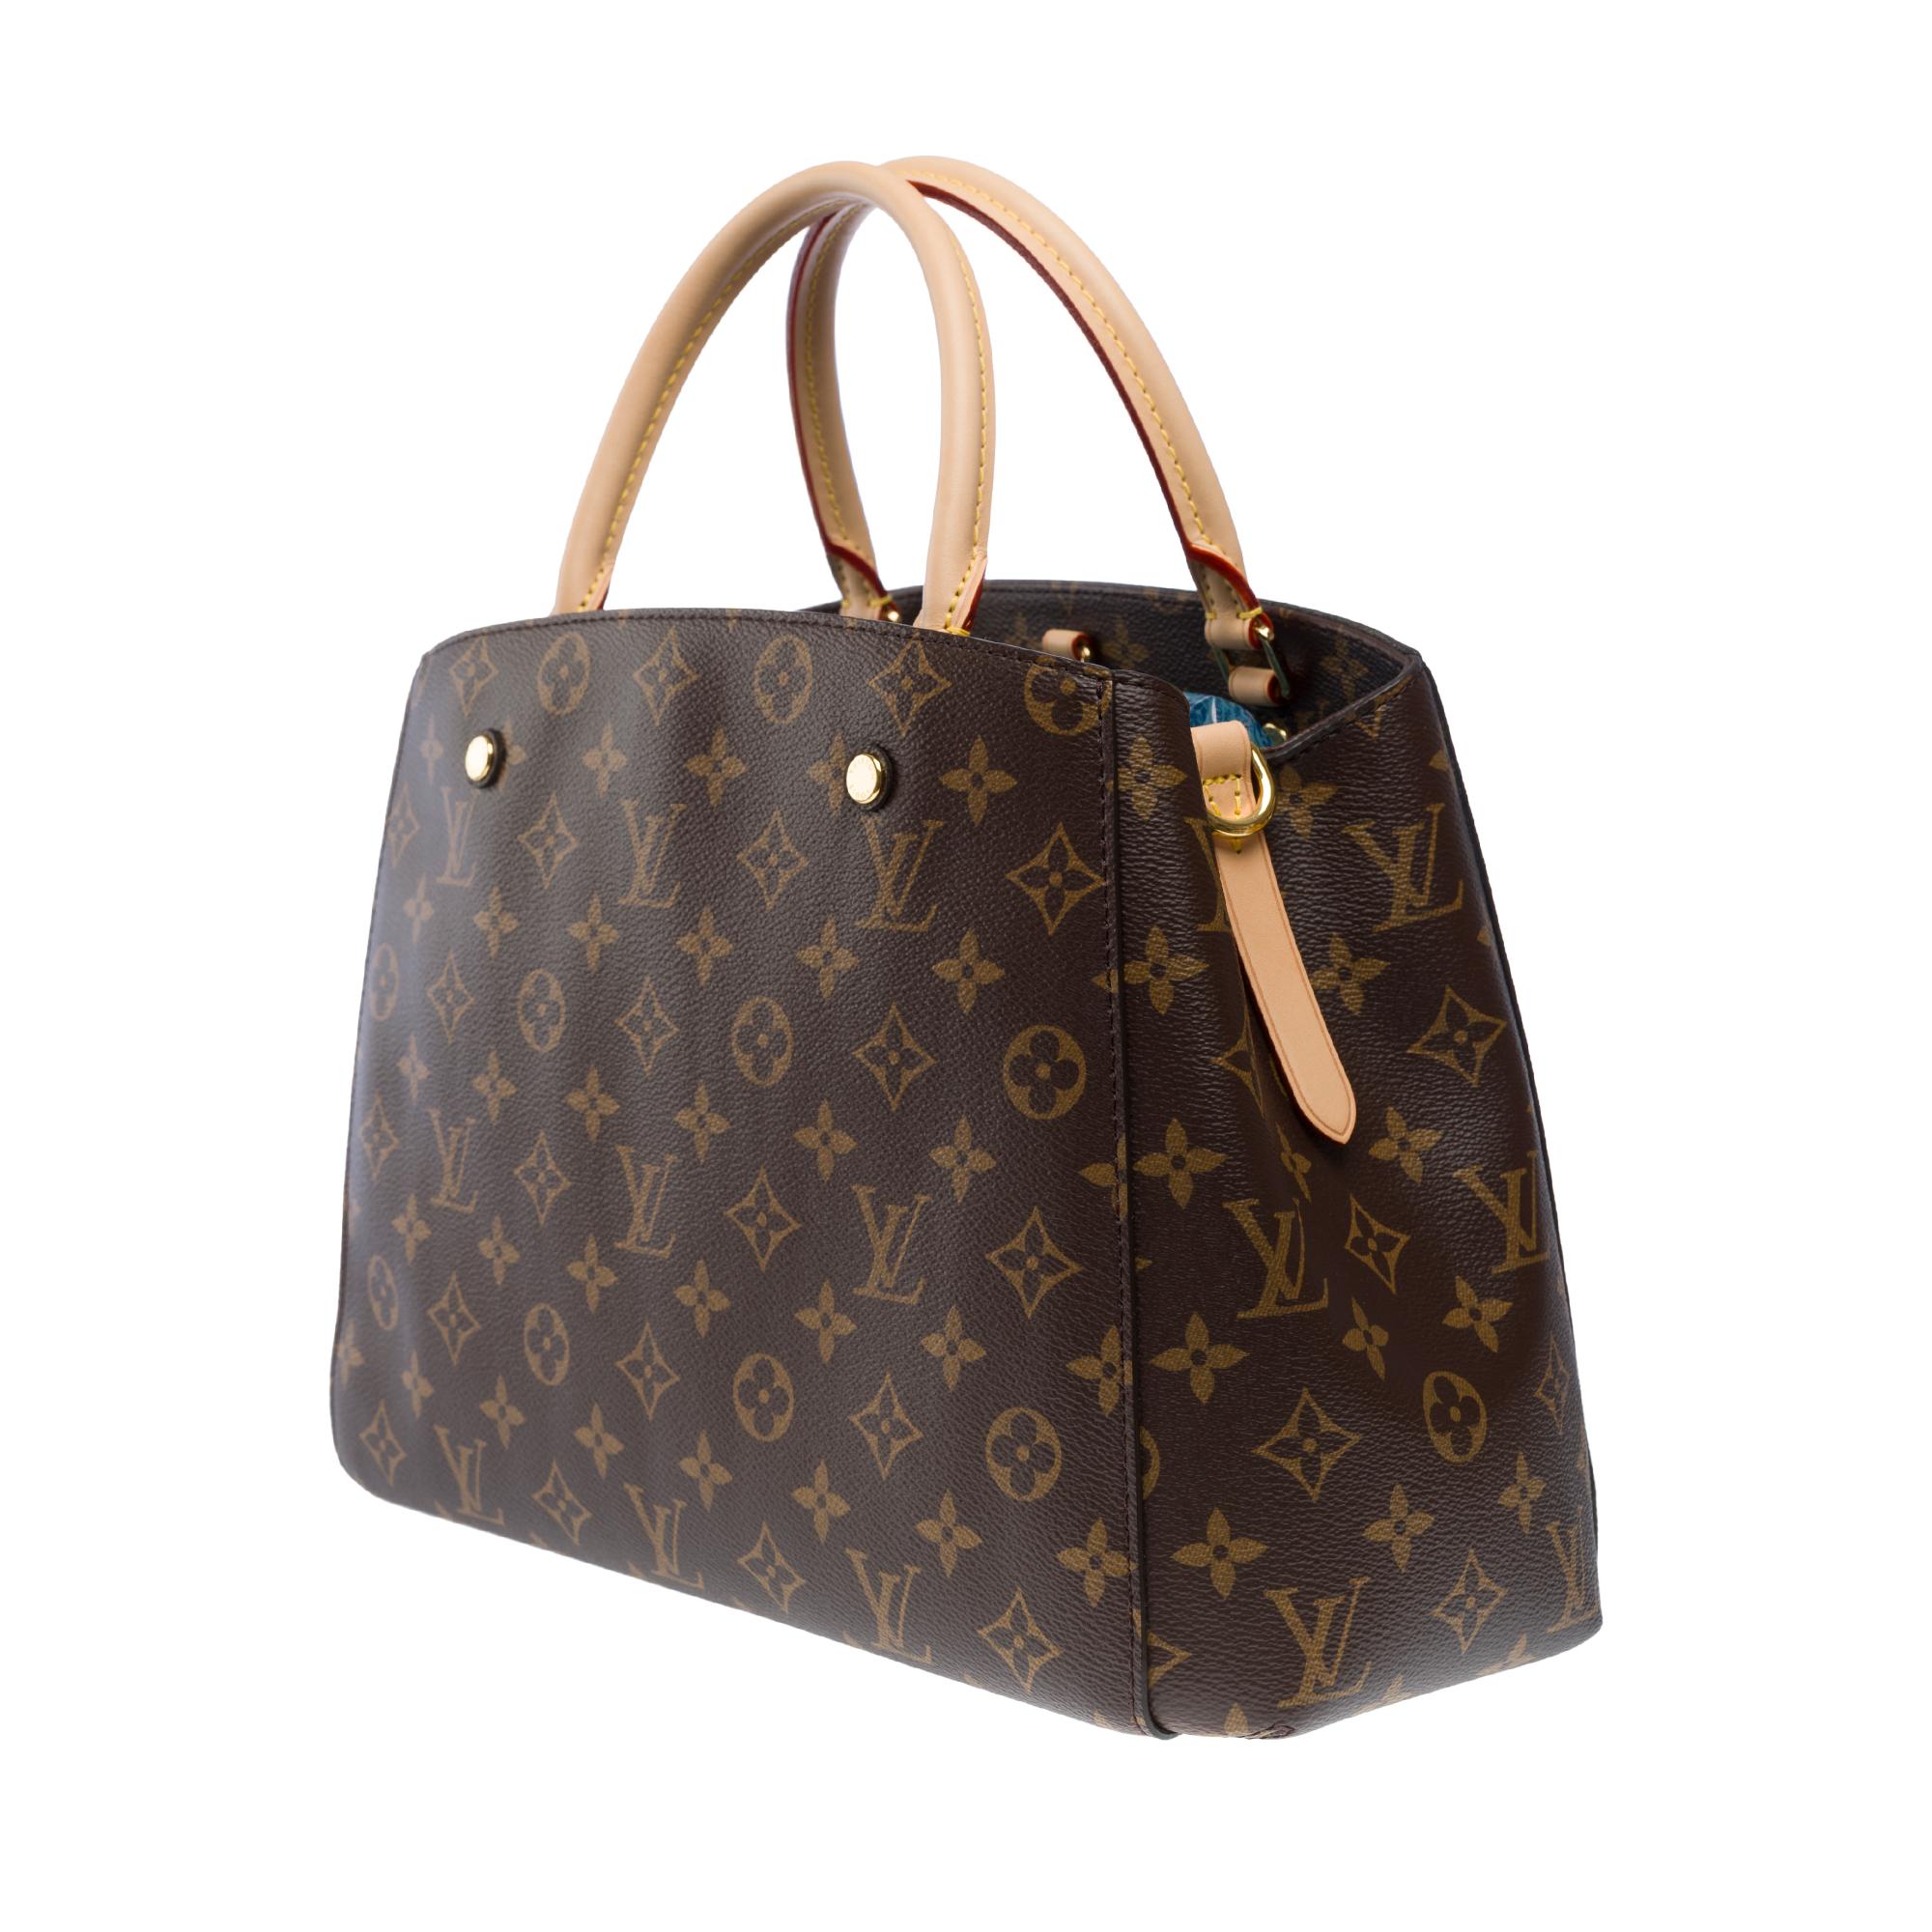 New Louis Vuitton Montaigne MM handbag strap in brown monogram canvas, GHW For Sale 1